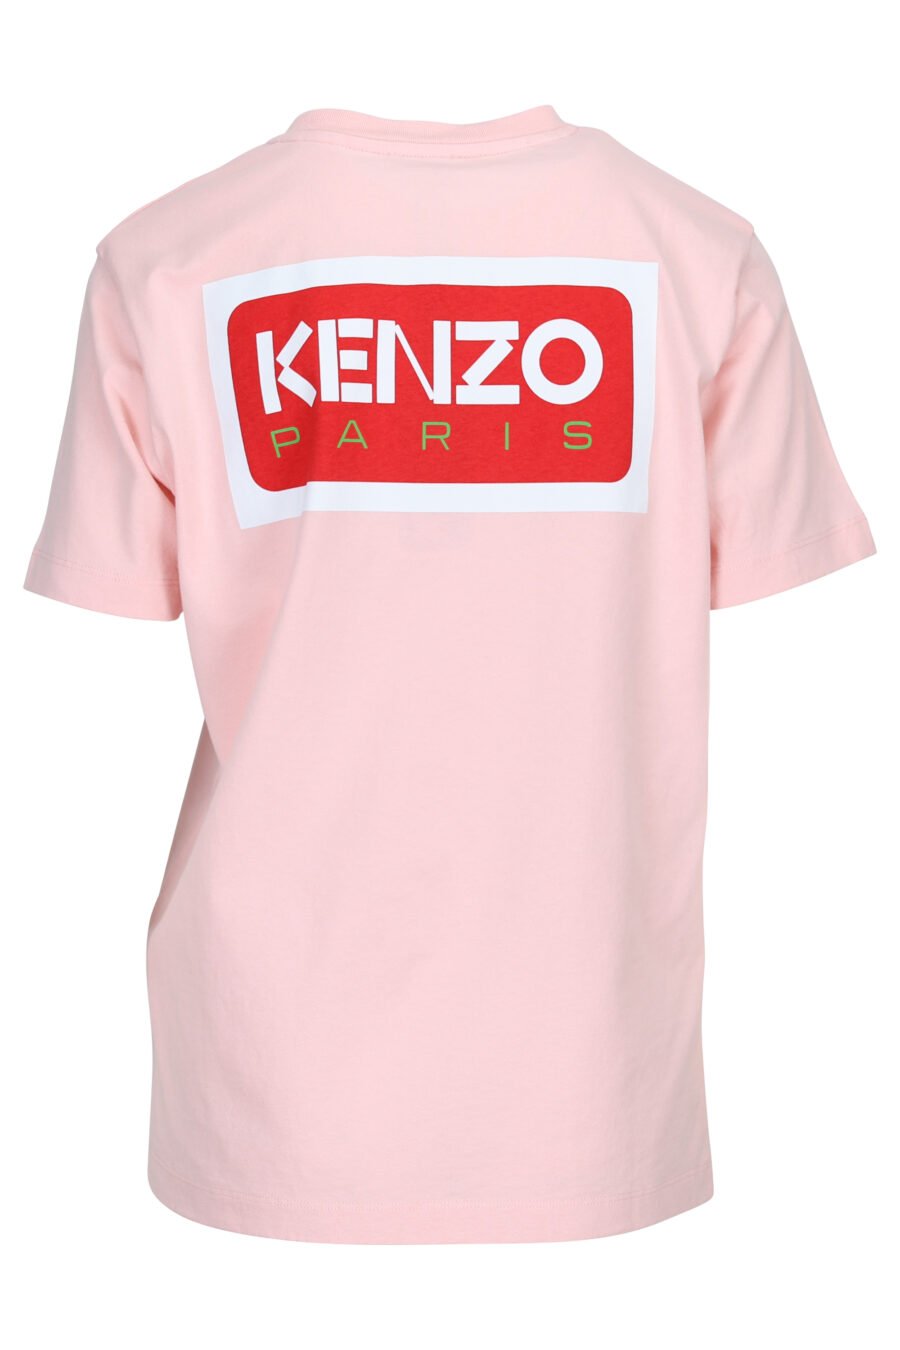 Camiseta rosa "oversize" con logo "kenzo paris" - 3612230520752 1